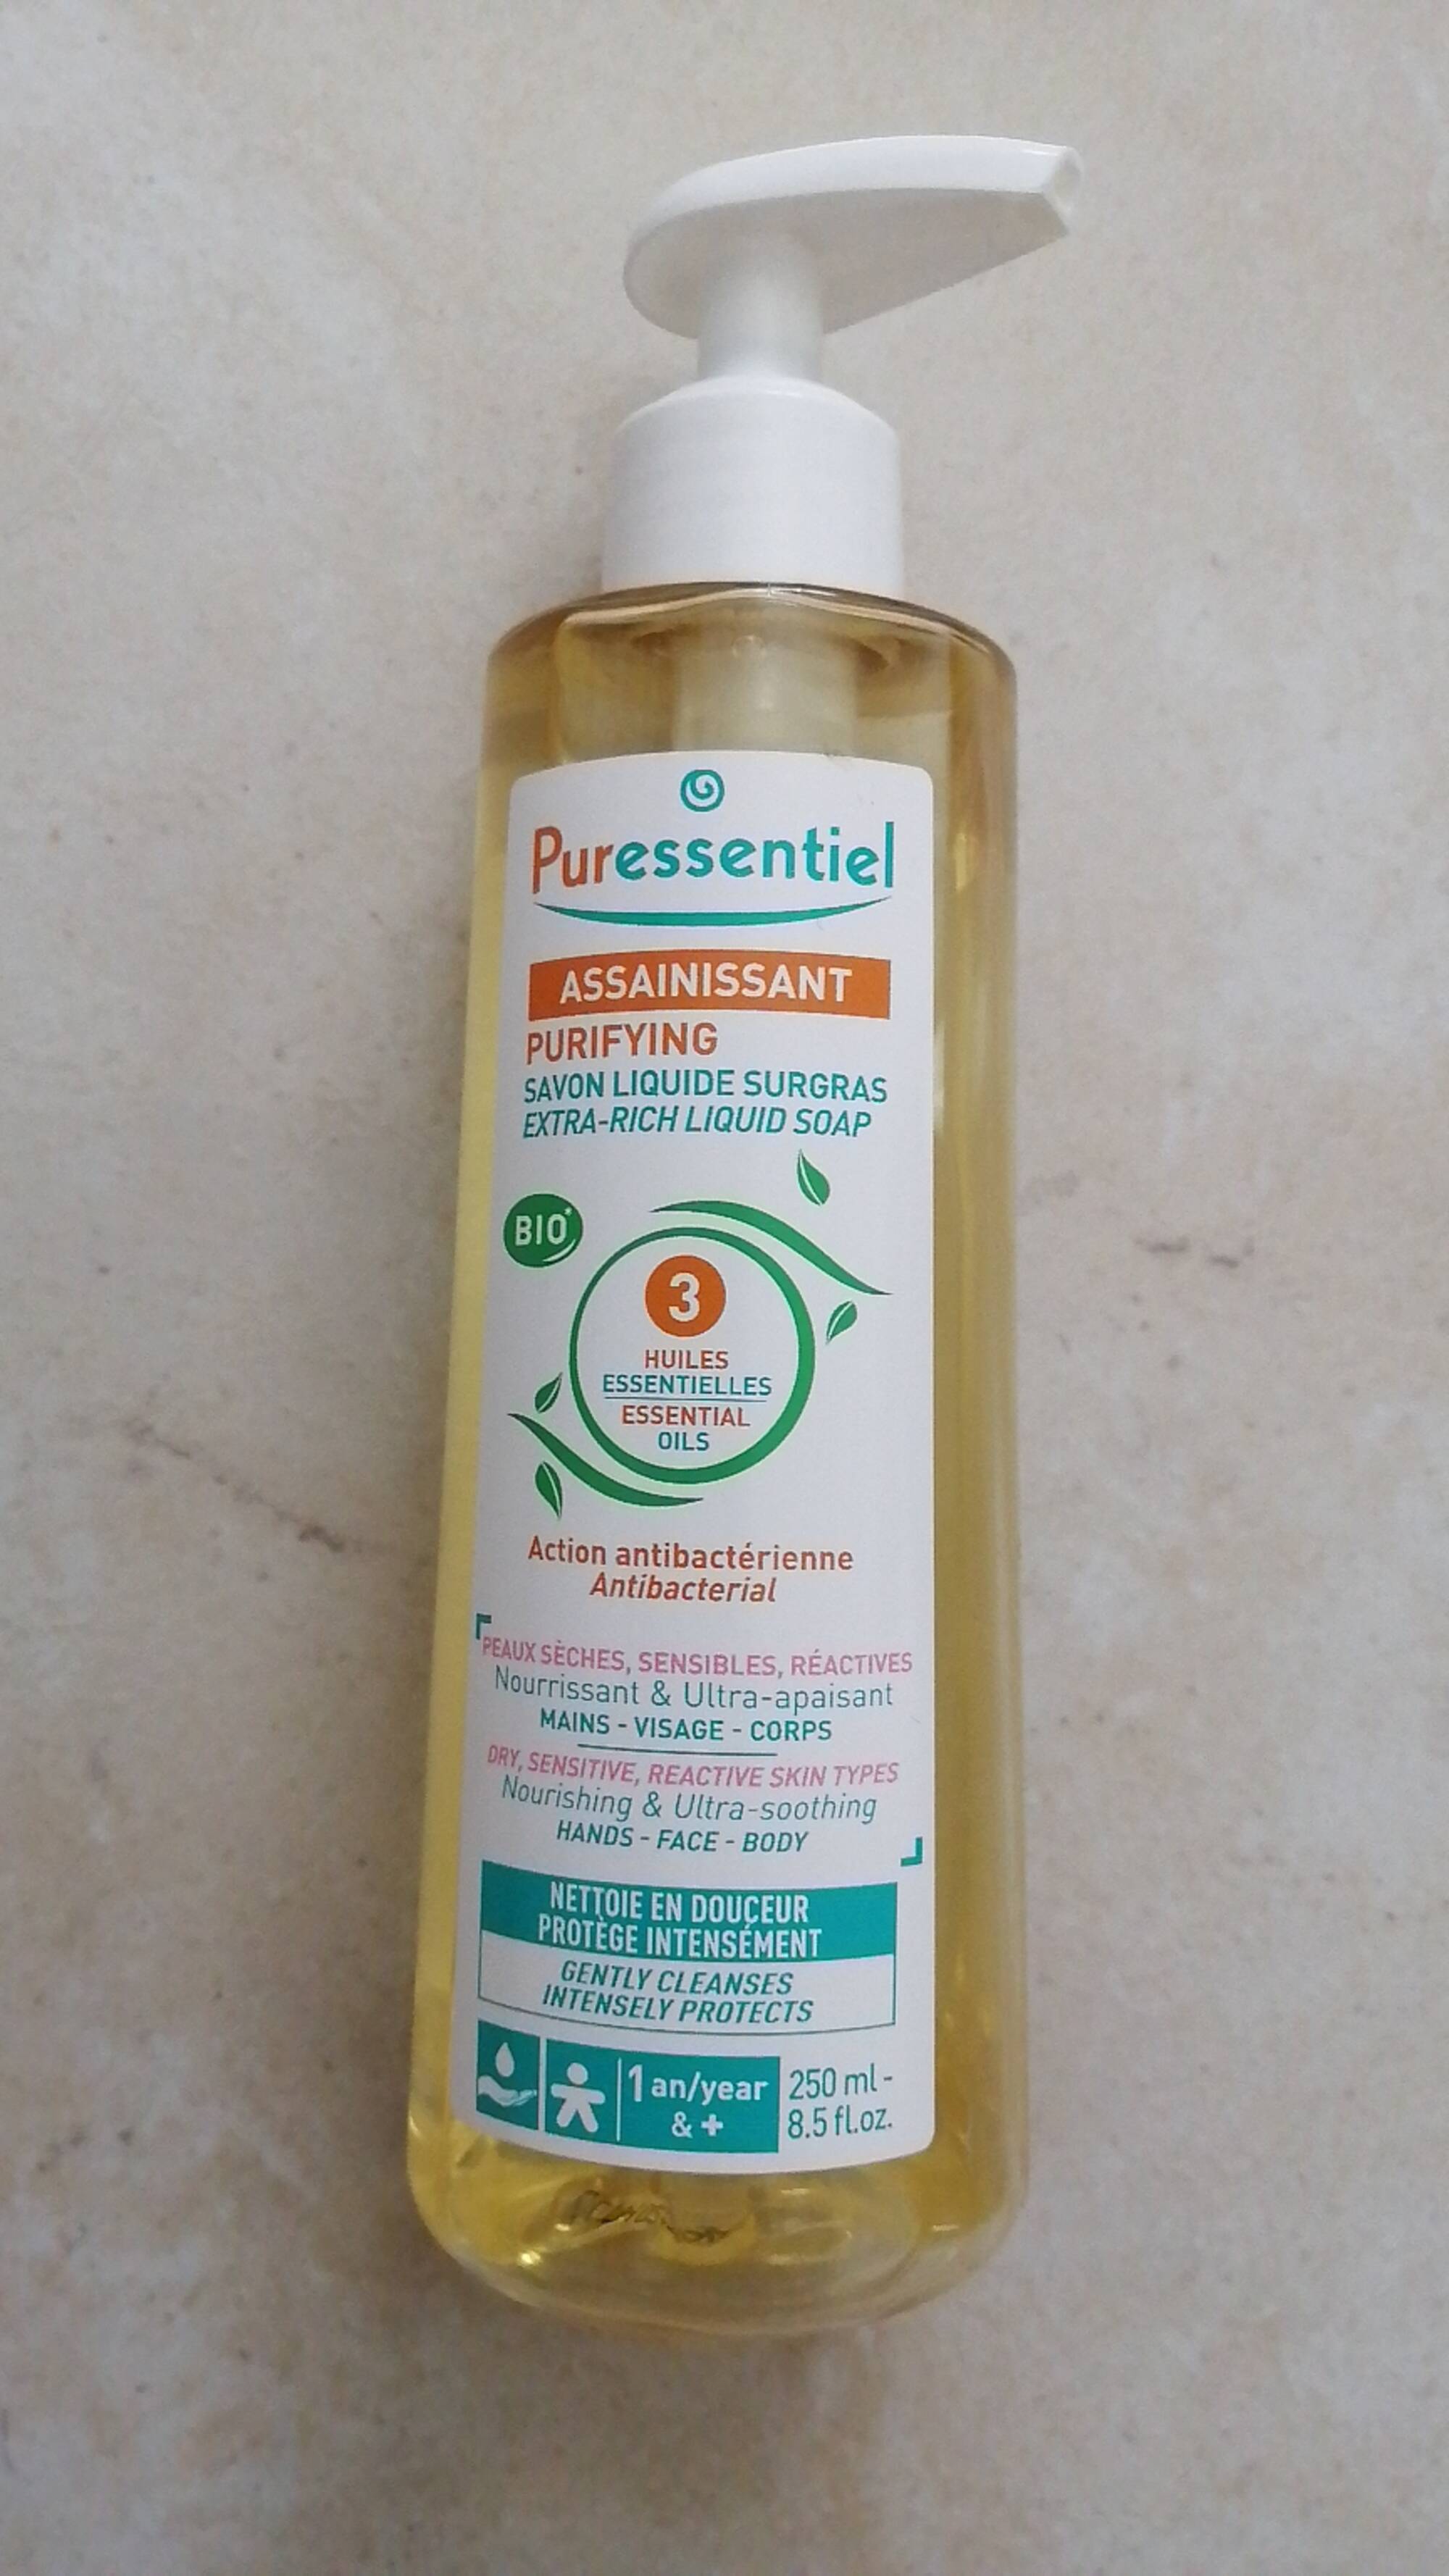 PURESSENTIEL - 3 huiles essentielles - Savon liquide surgras bio